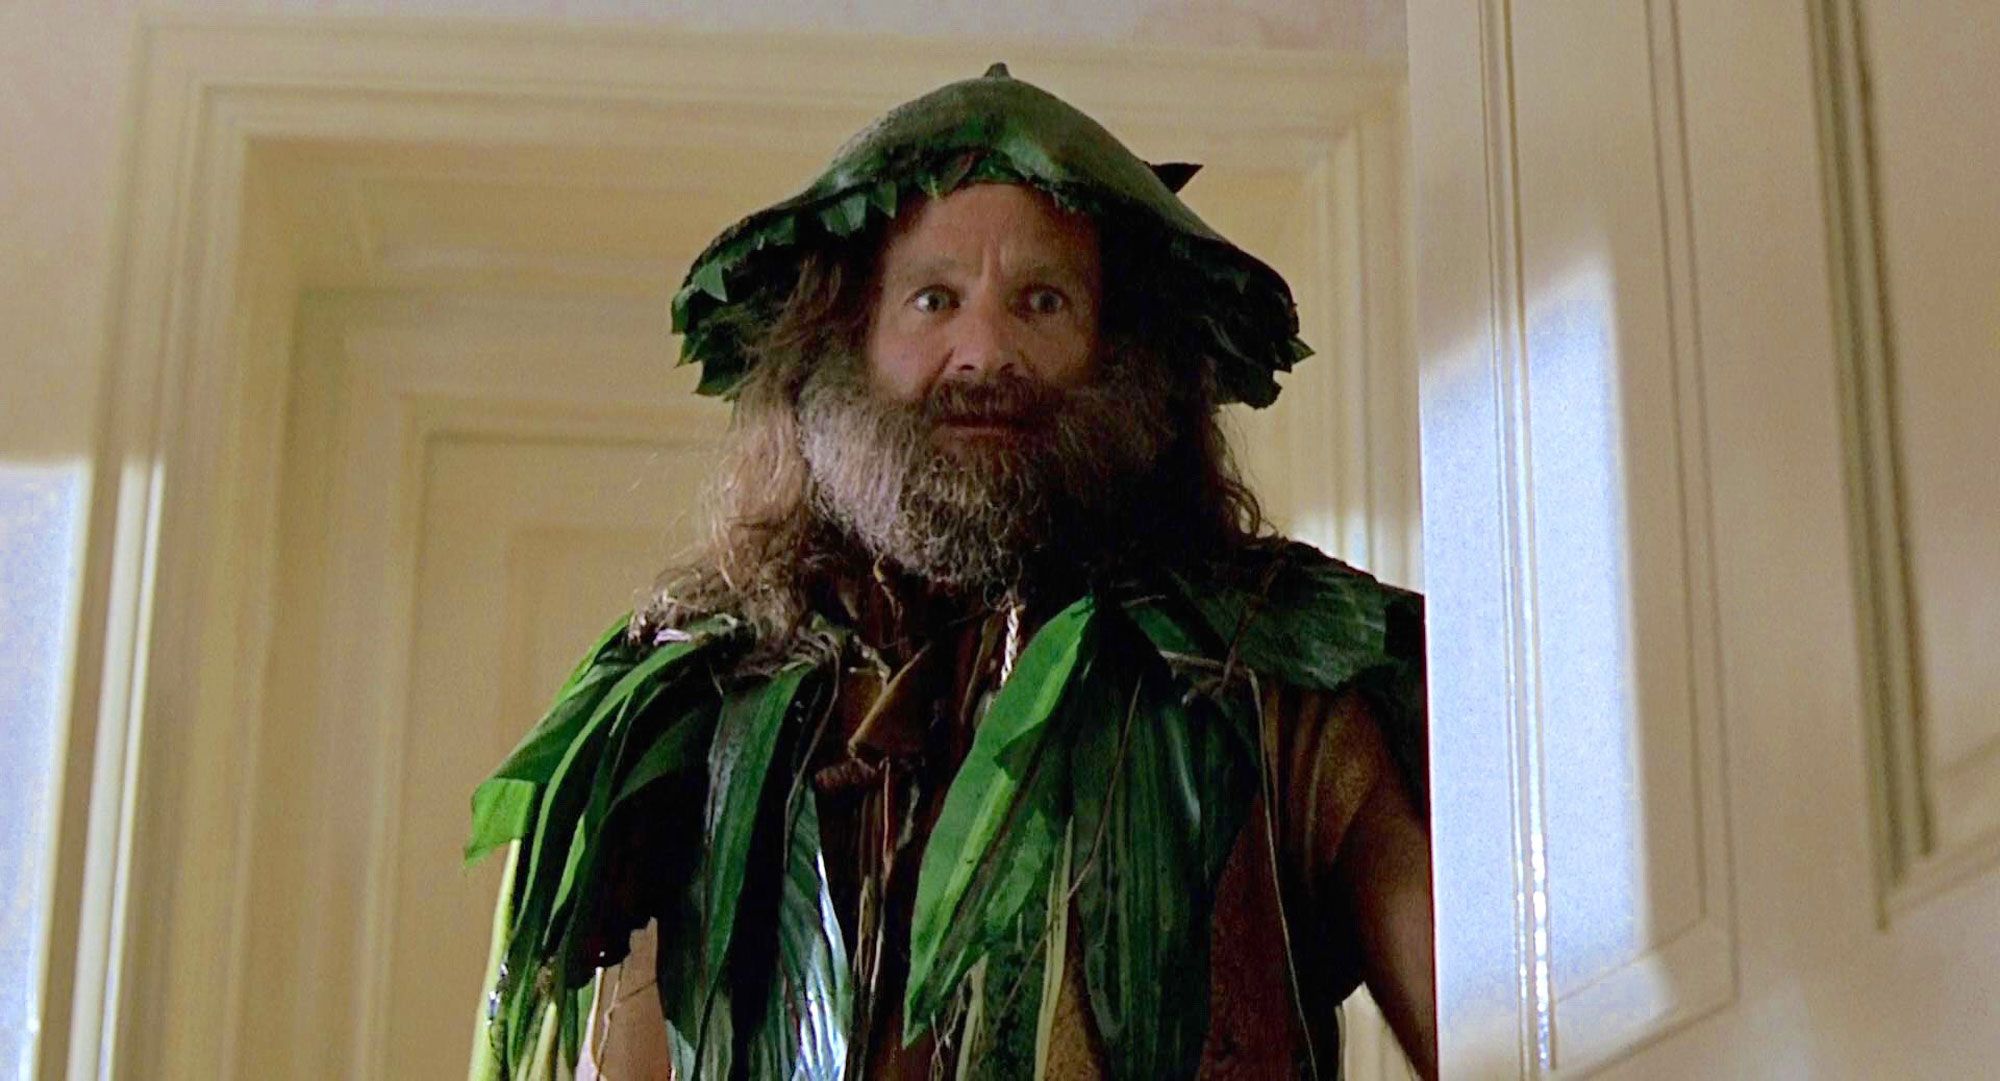 Robin Williams in green leave costume and big beard